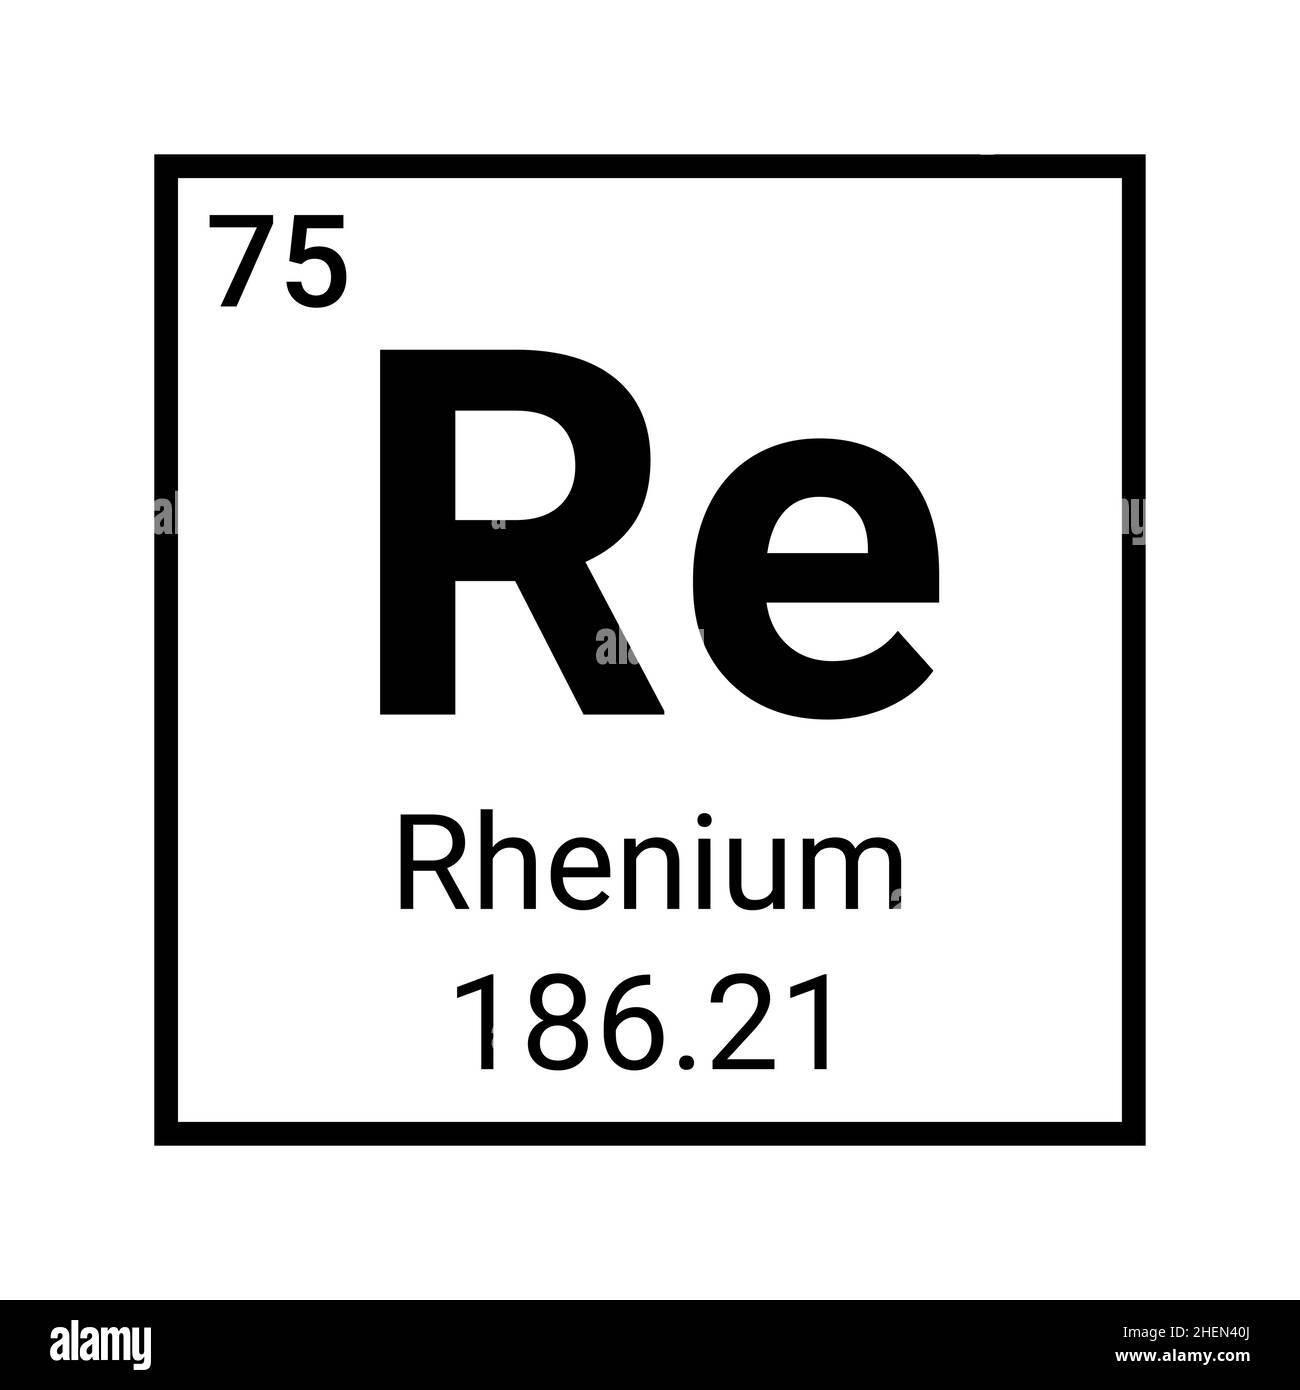 Rhenium chemical symbol periodic education atomic element icon science sign Stock Vector